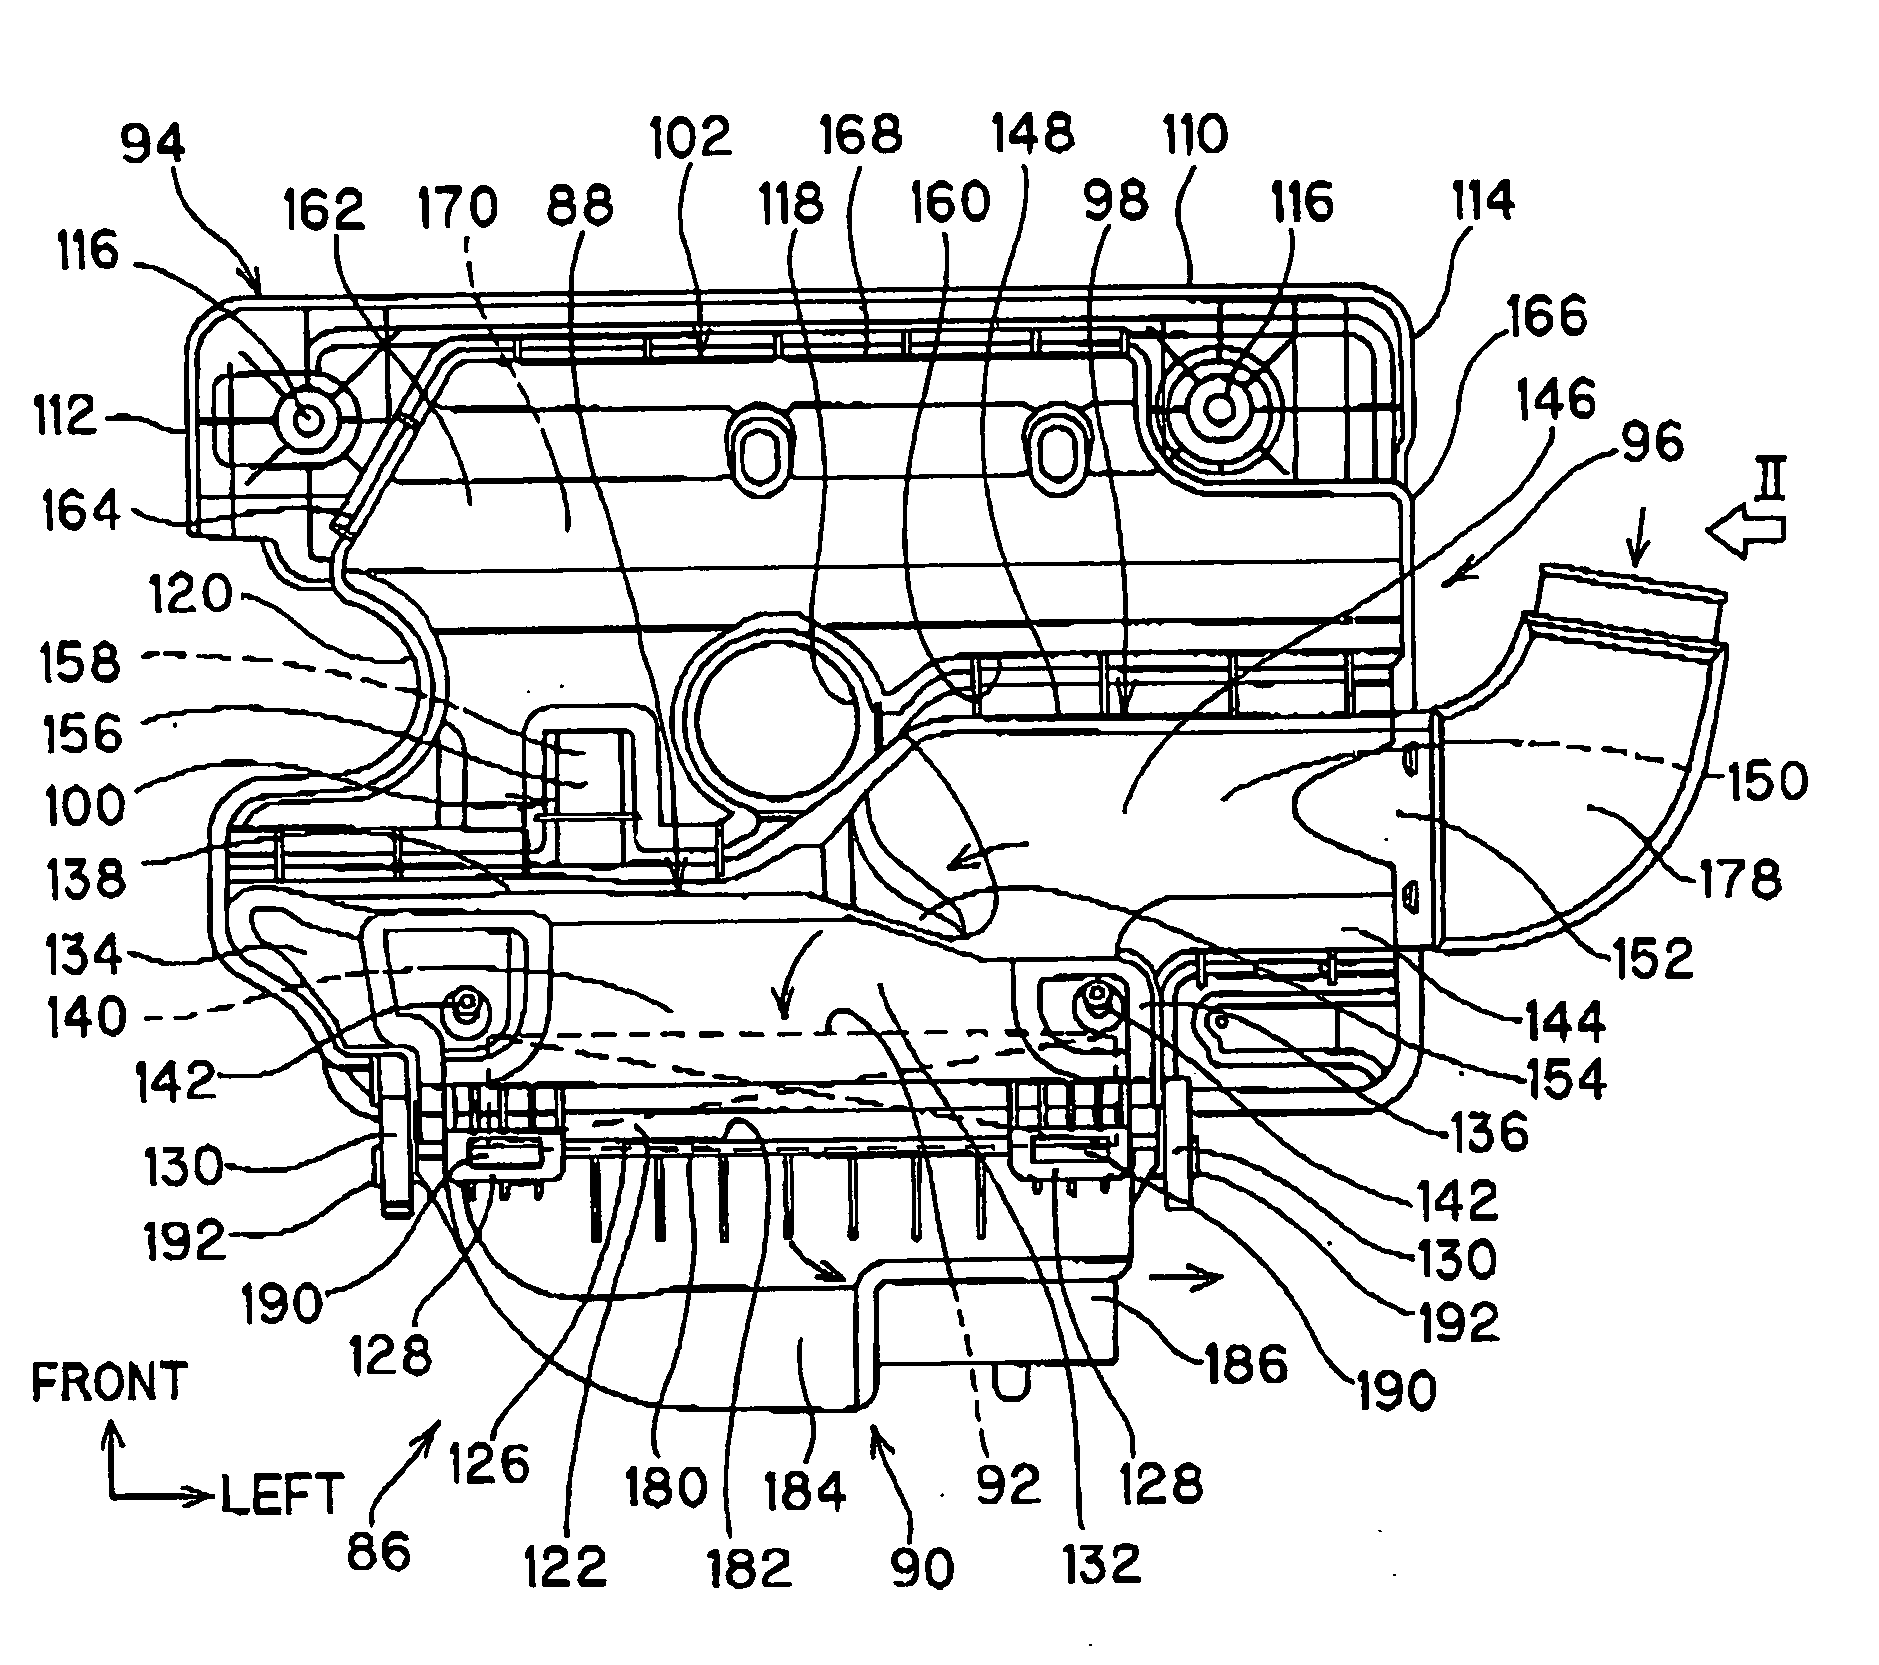 Intake system of engine